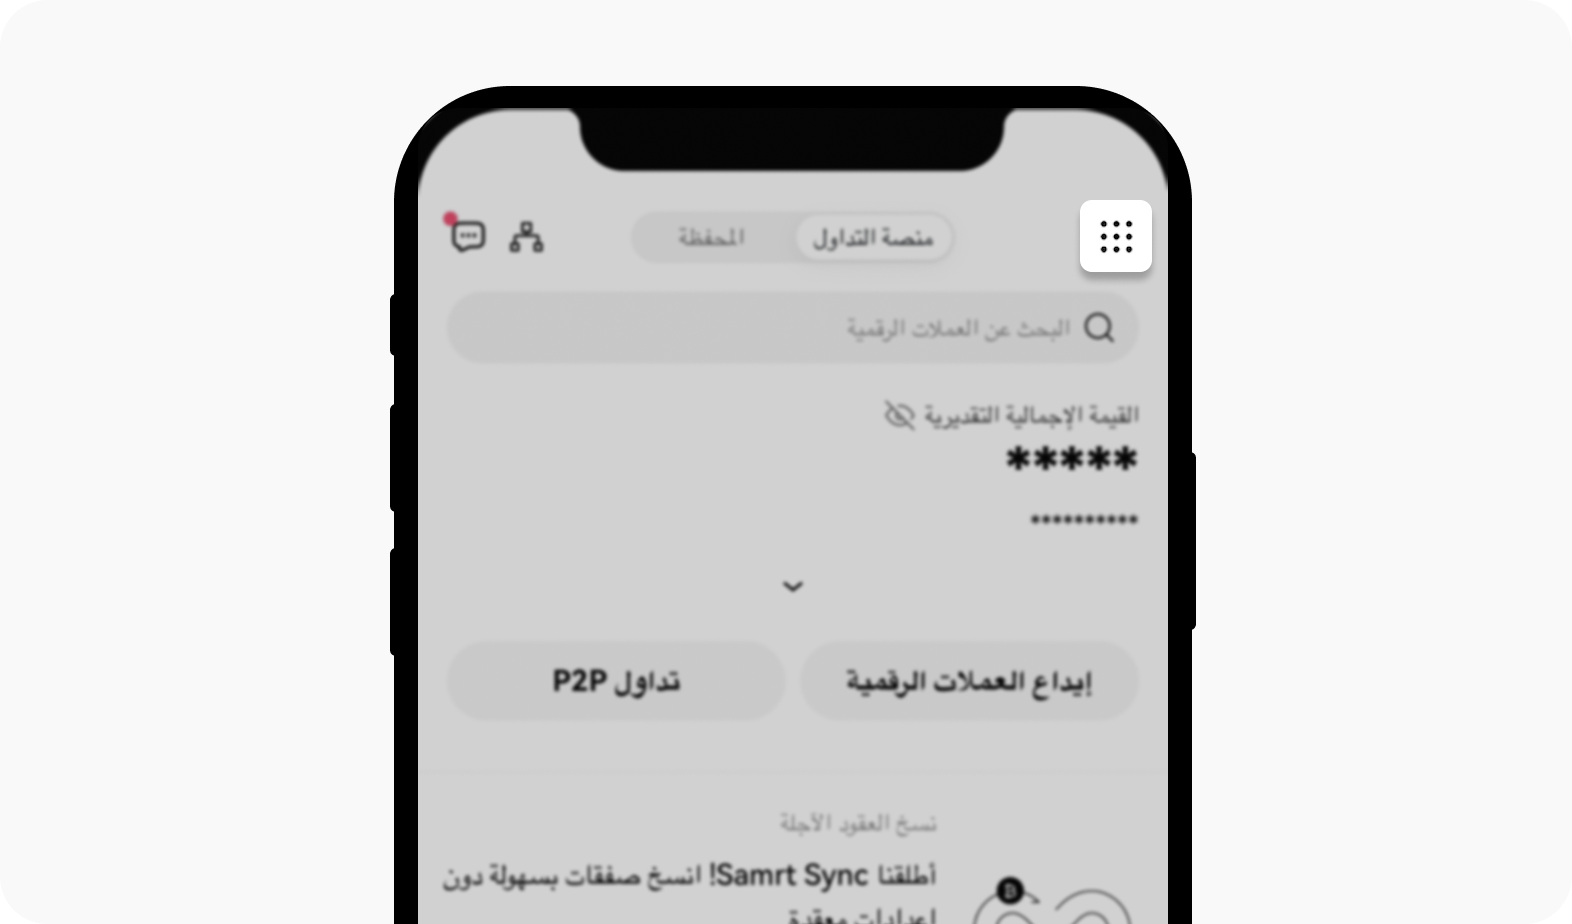 CT-accountsecurity-usercenter-app1-arab